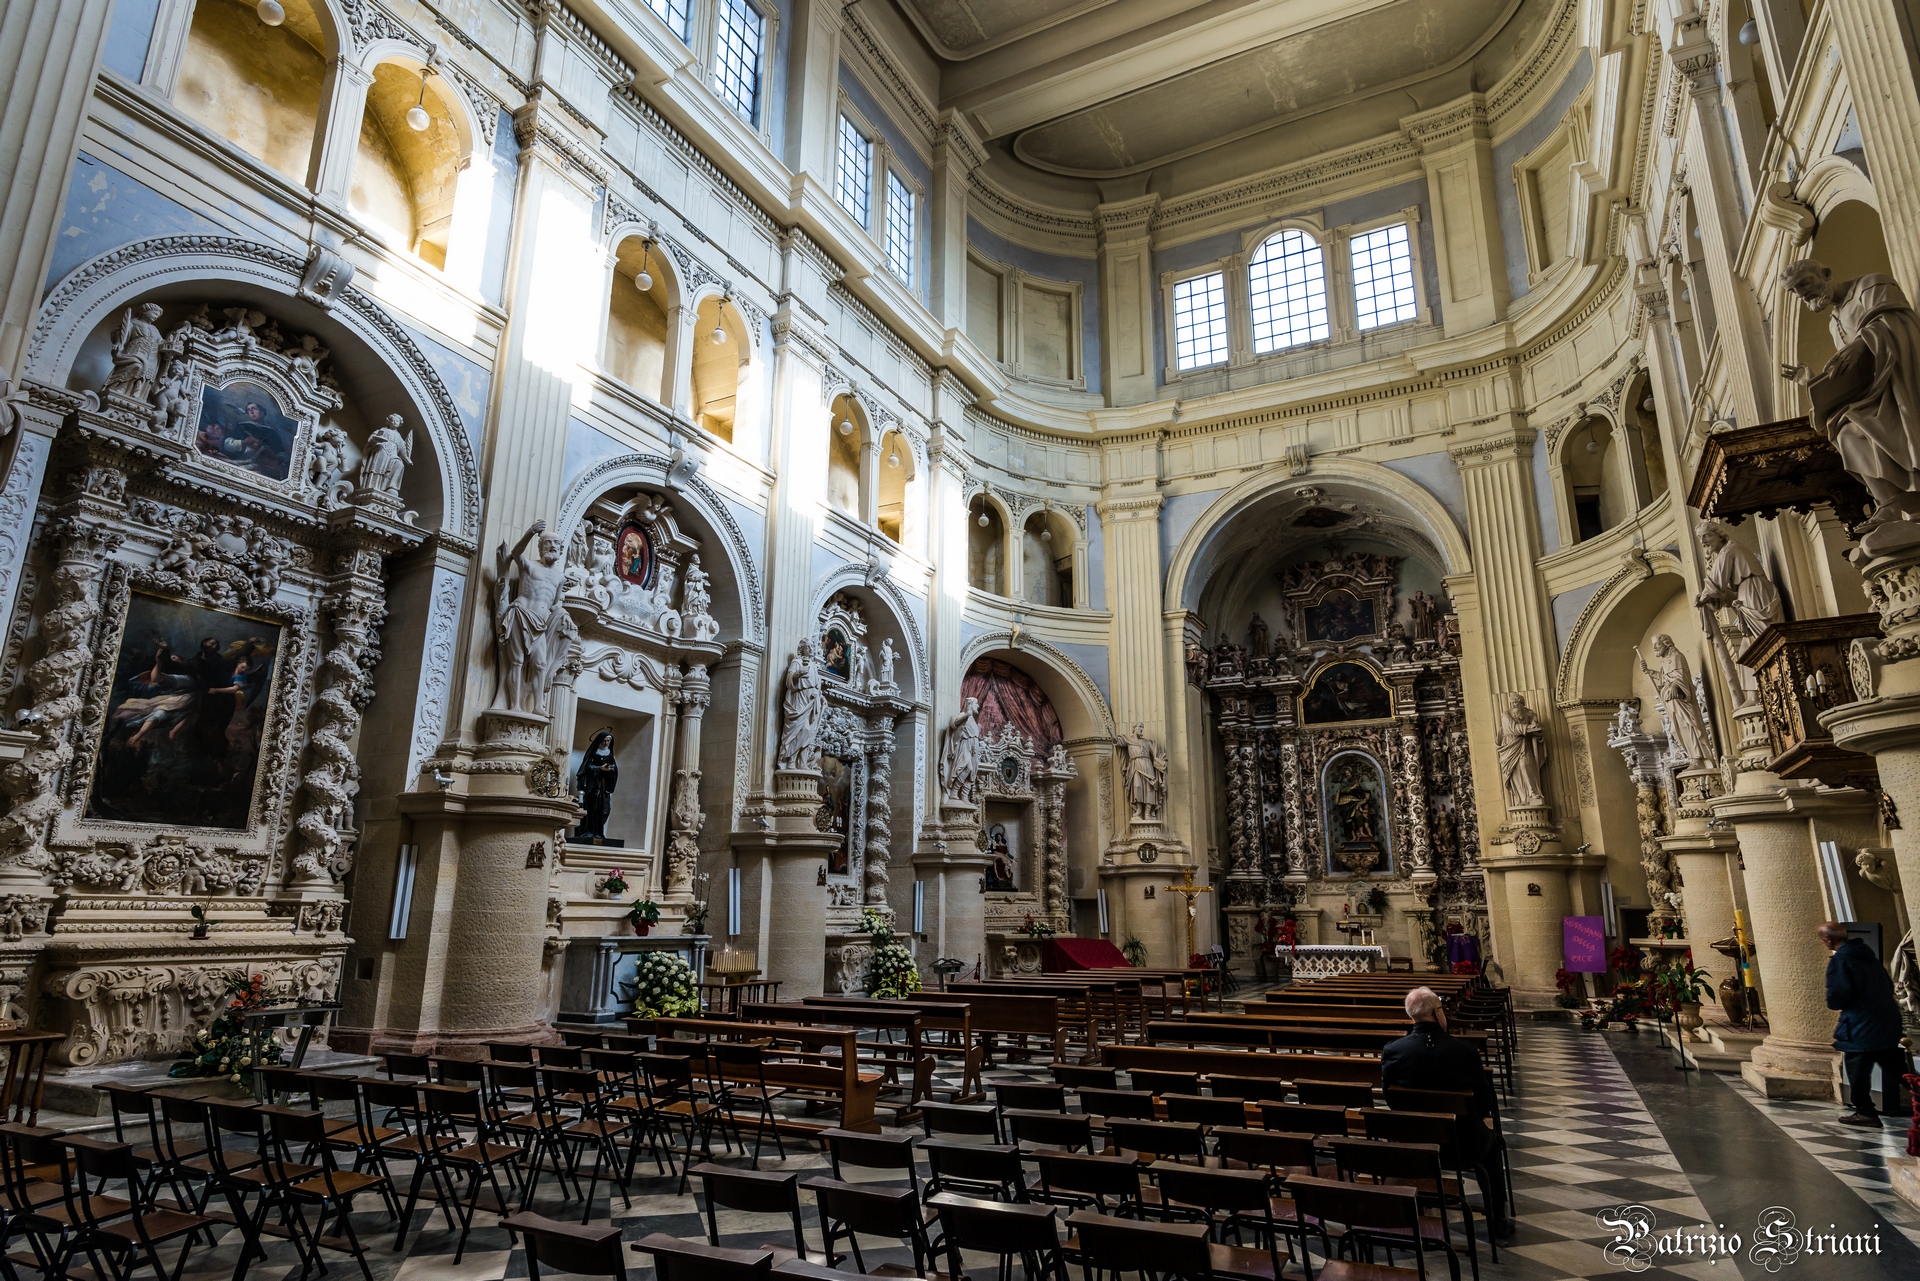 Lecce, the church of St. Matthew...